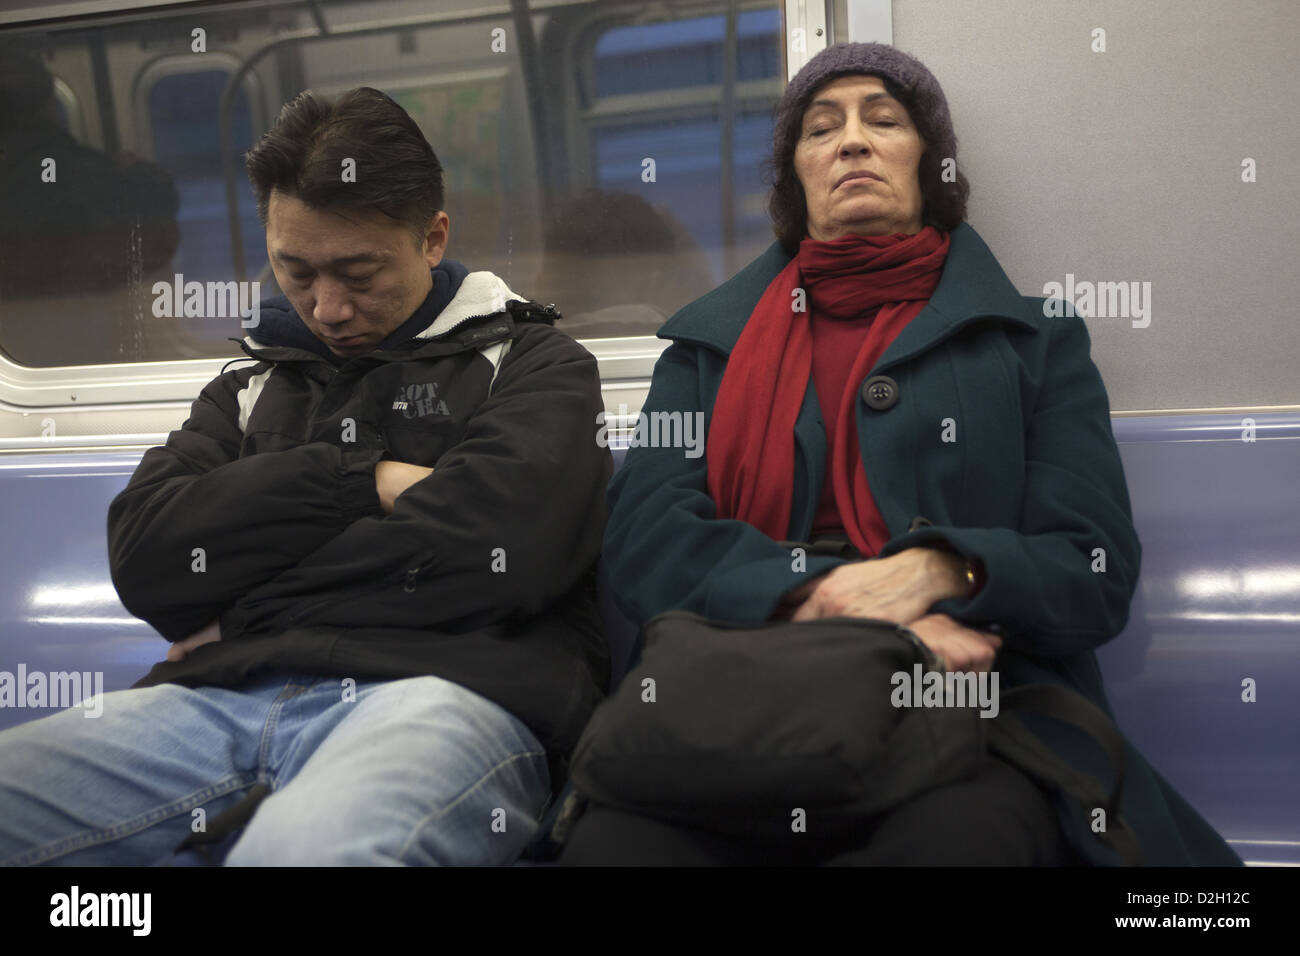 Two tired subway riders, New York City. Stock Photo